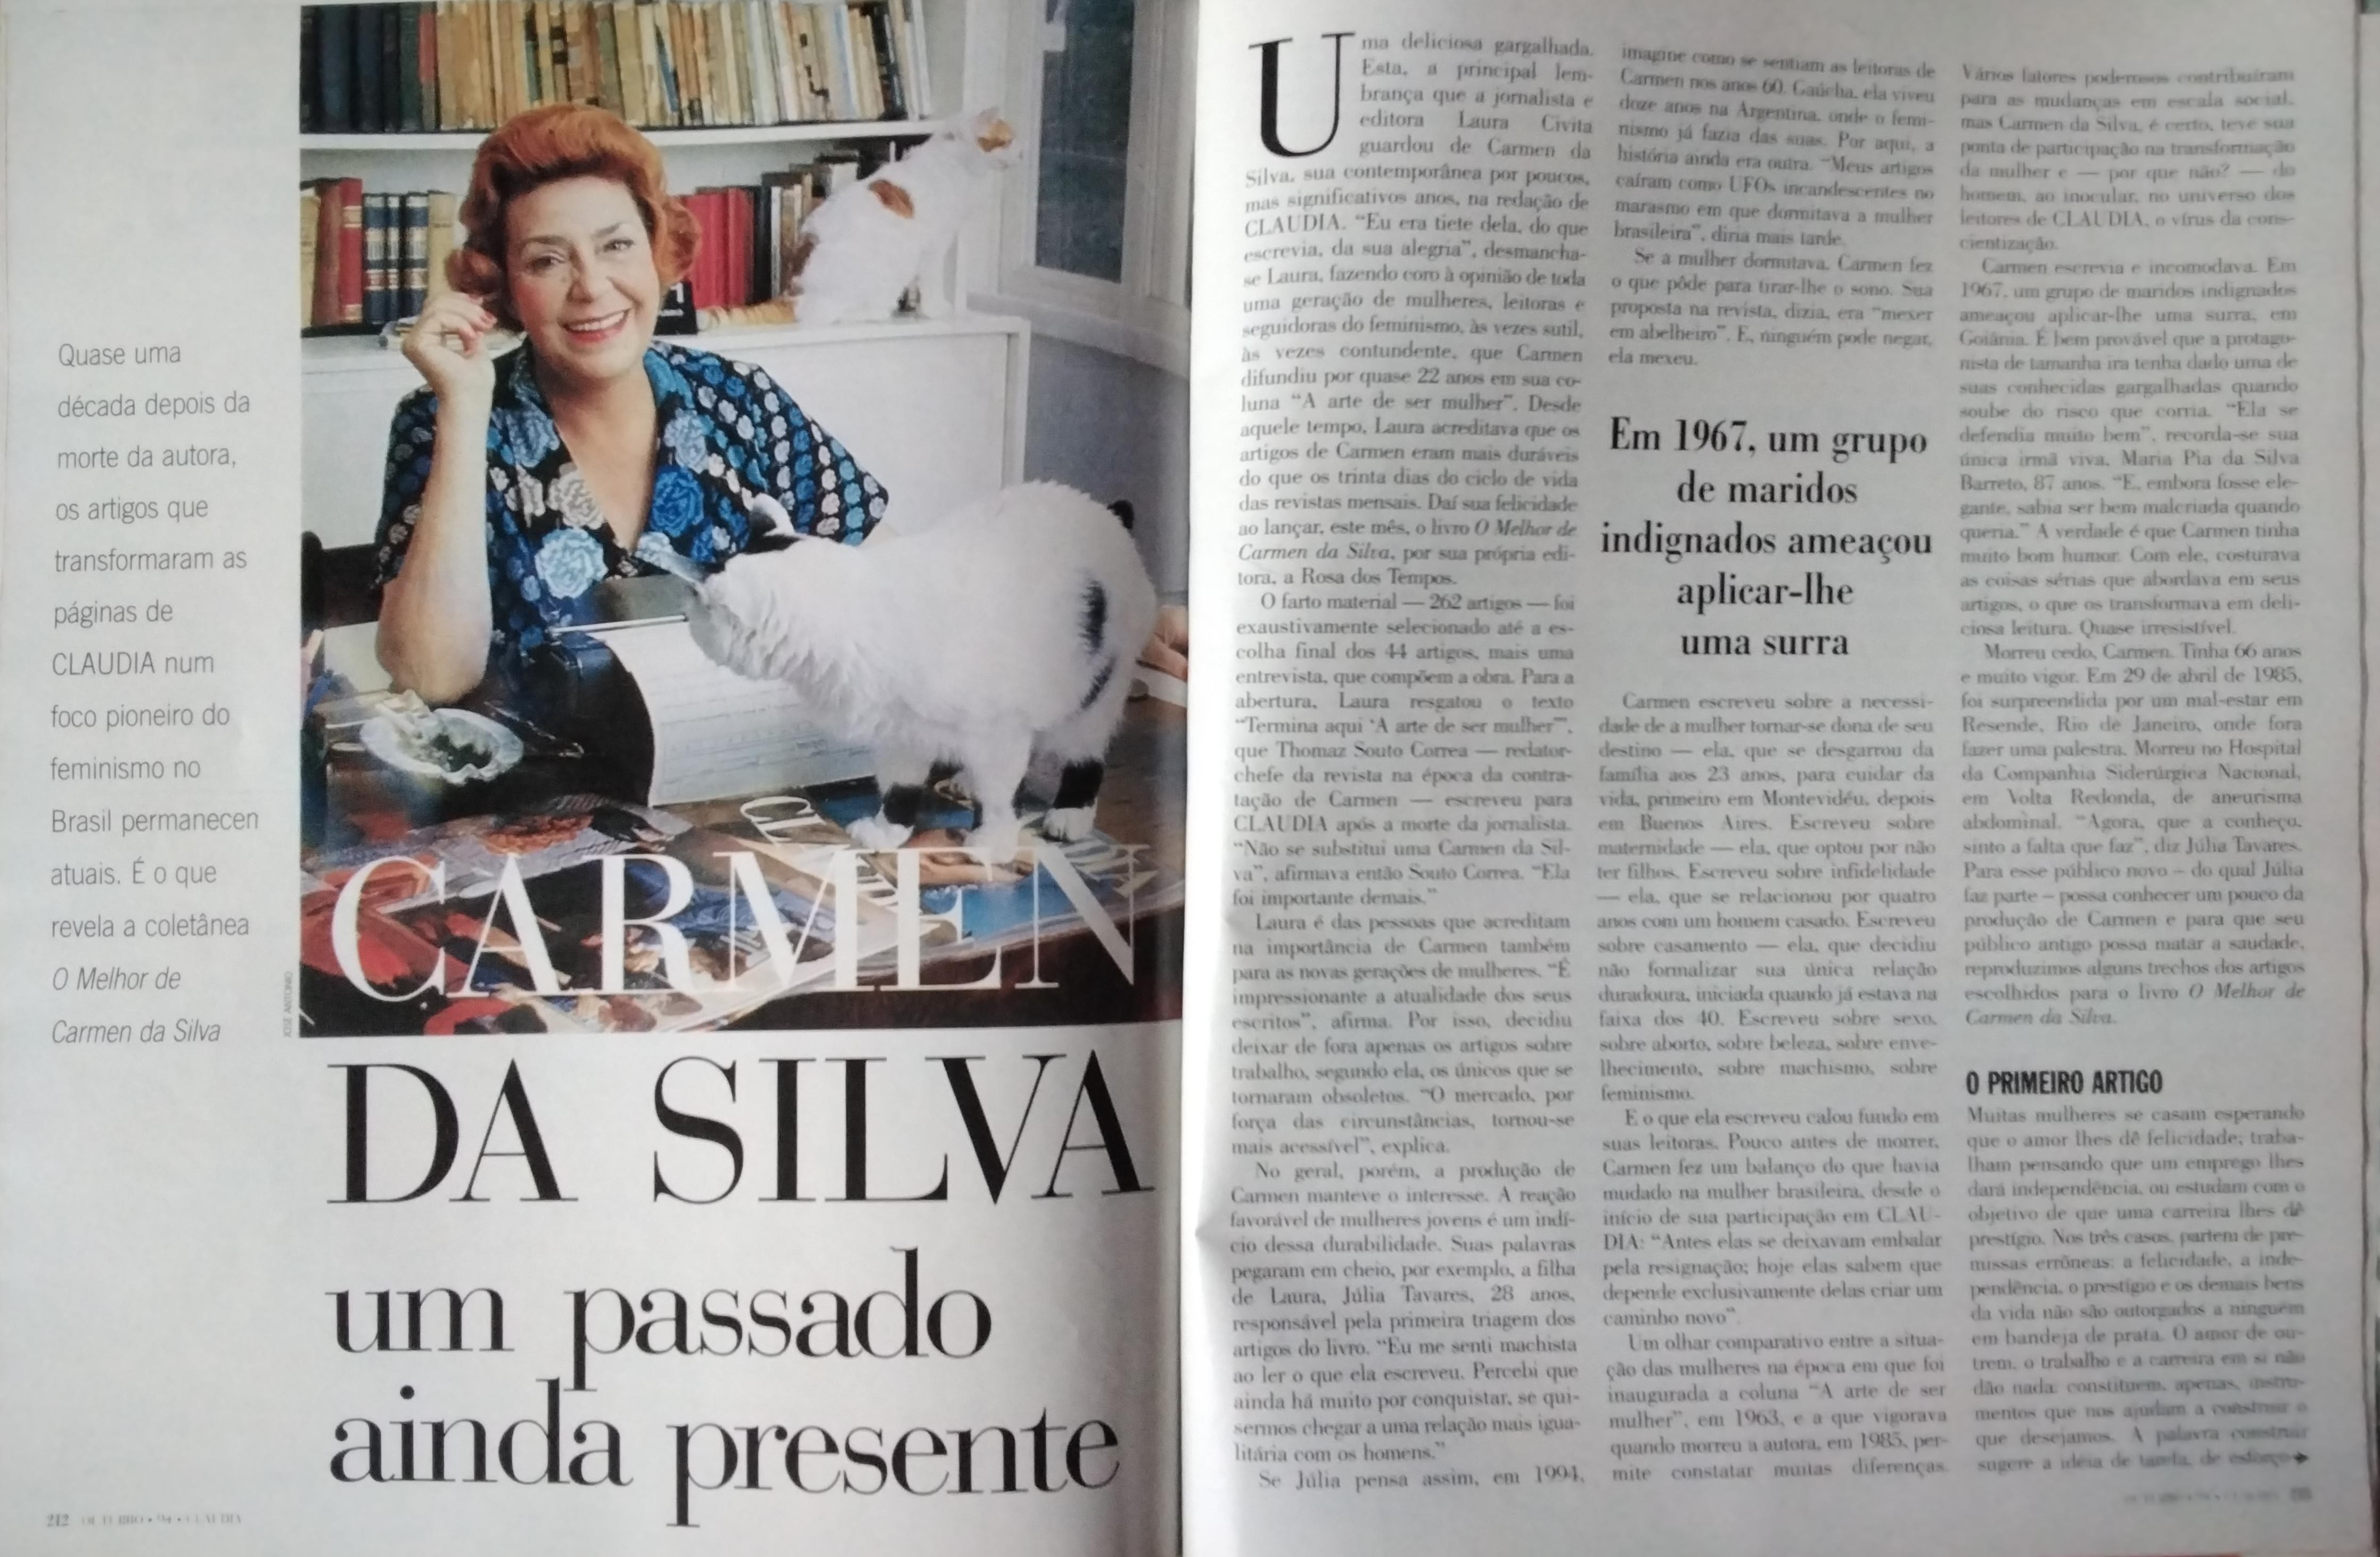 Revista Claudia, nº 397, outubro de 1994. Pg. 212 e 213.